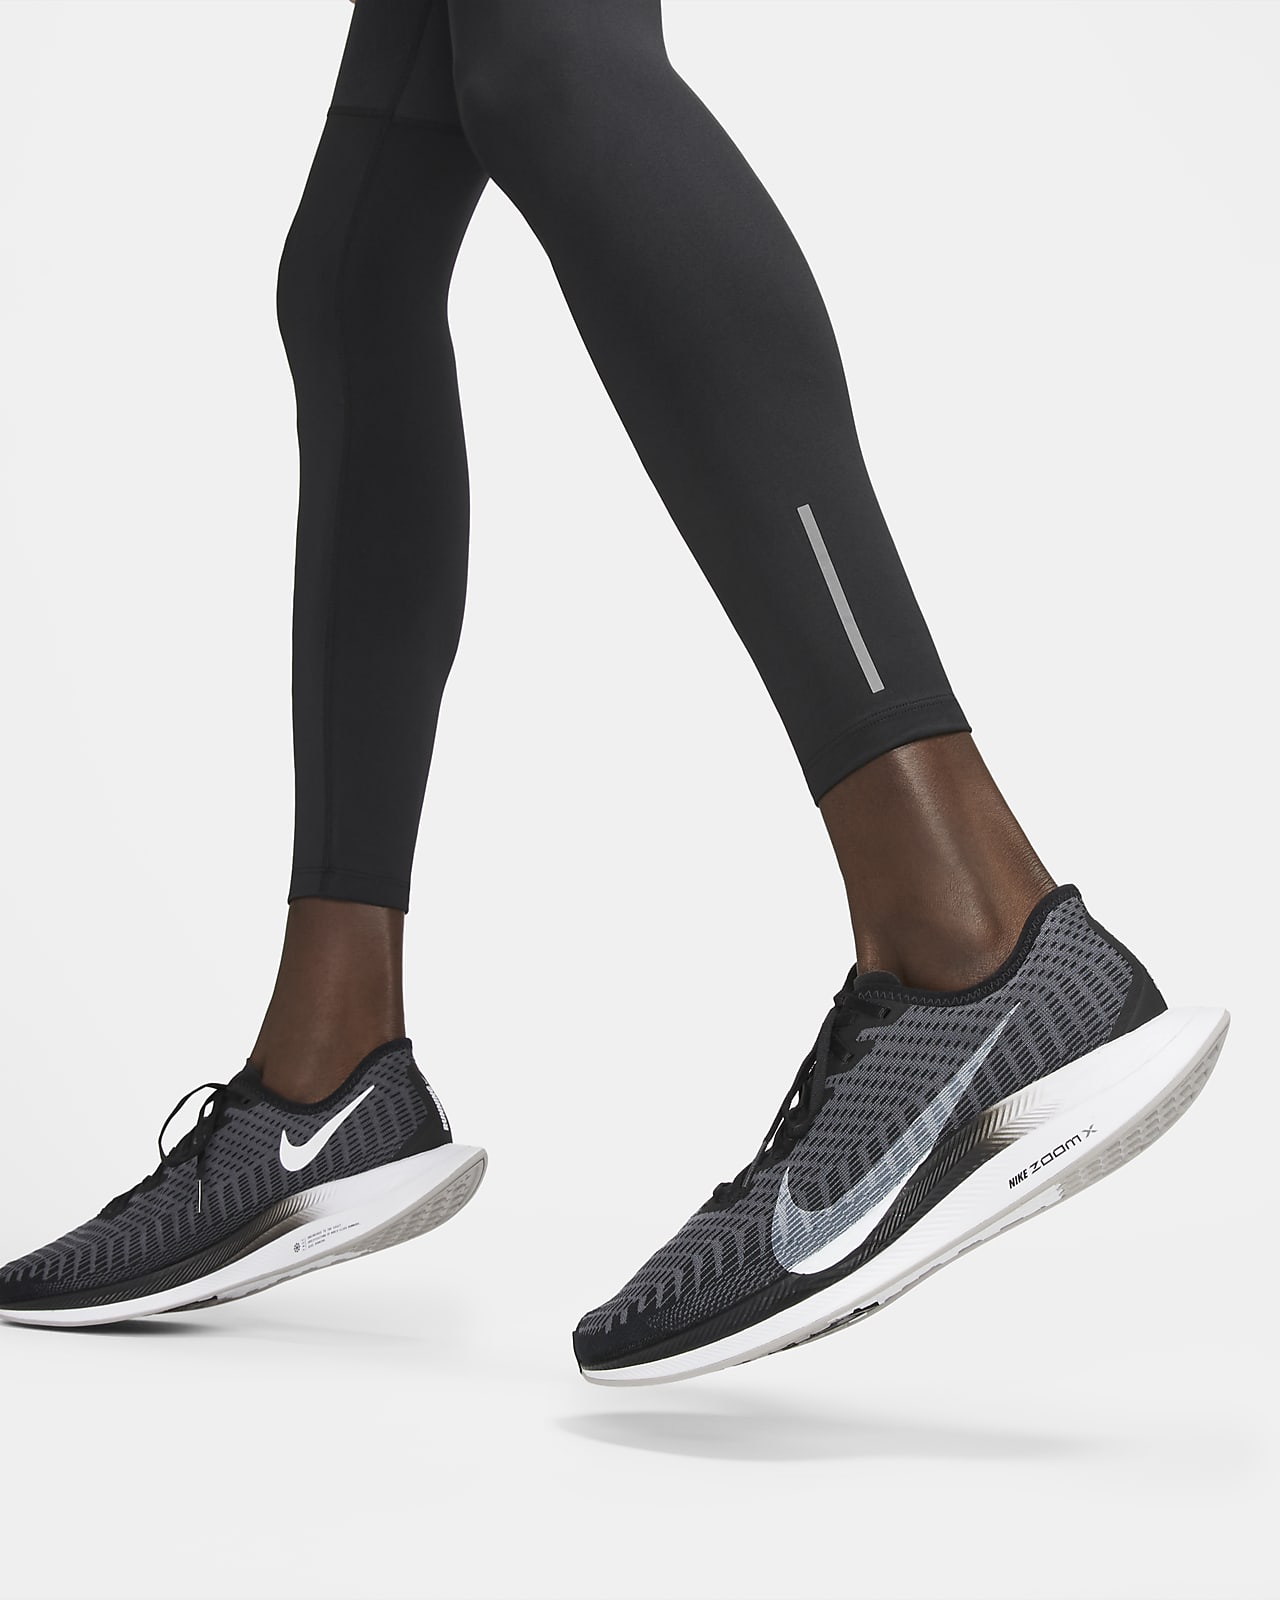 Nike Tights: Form Meets Function – EMEHT